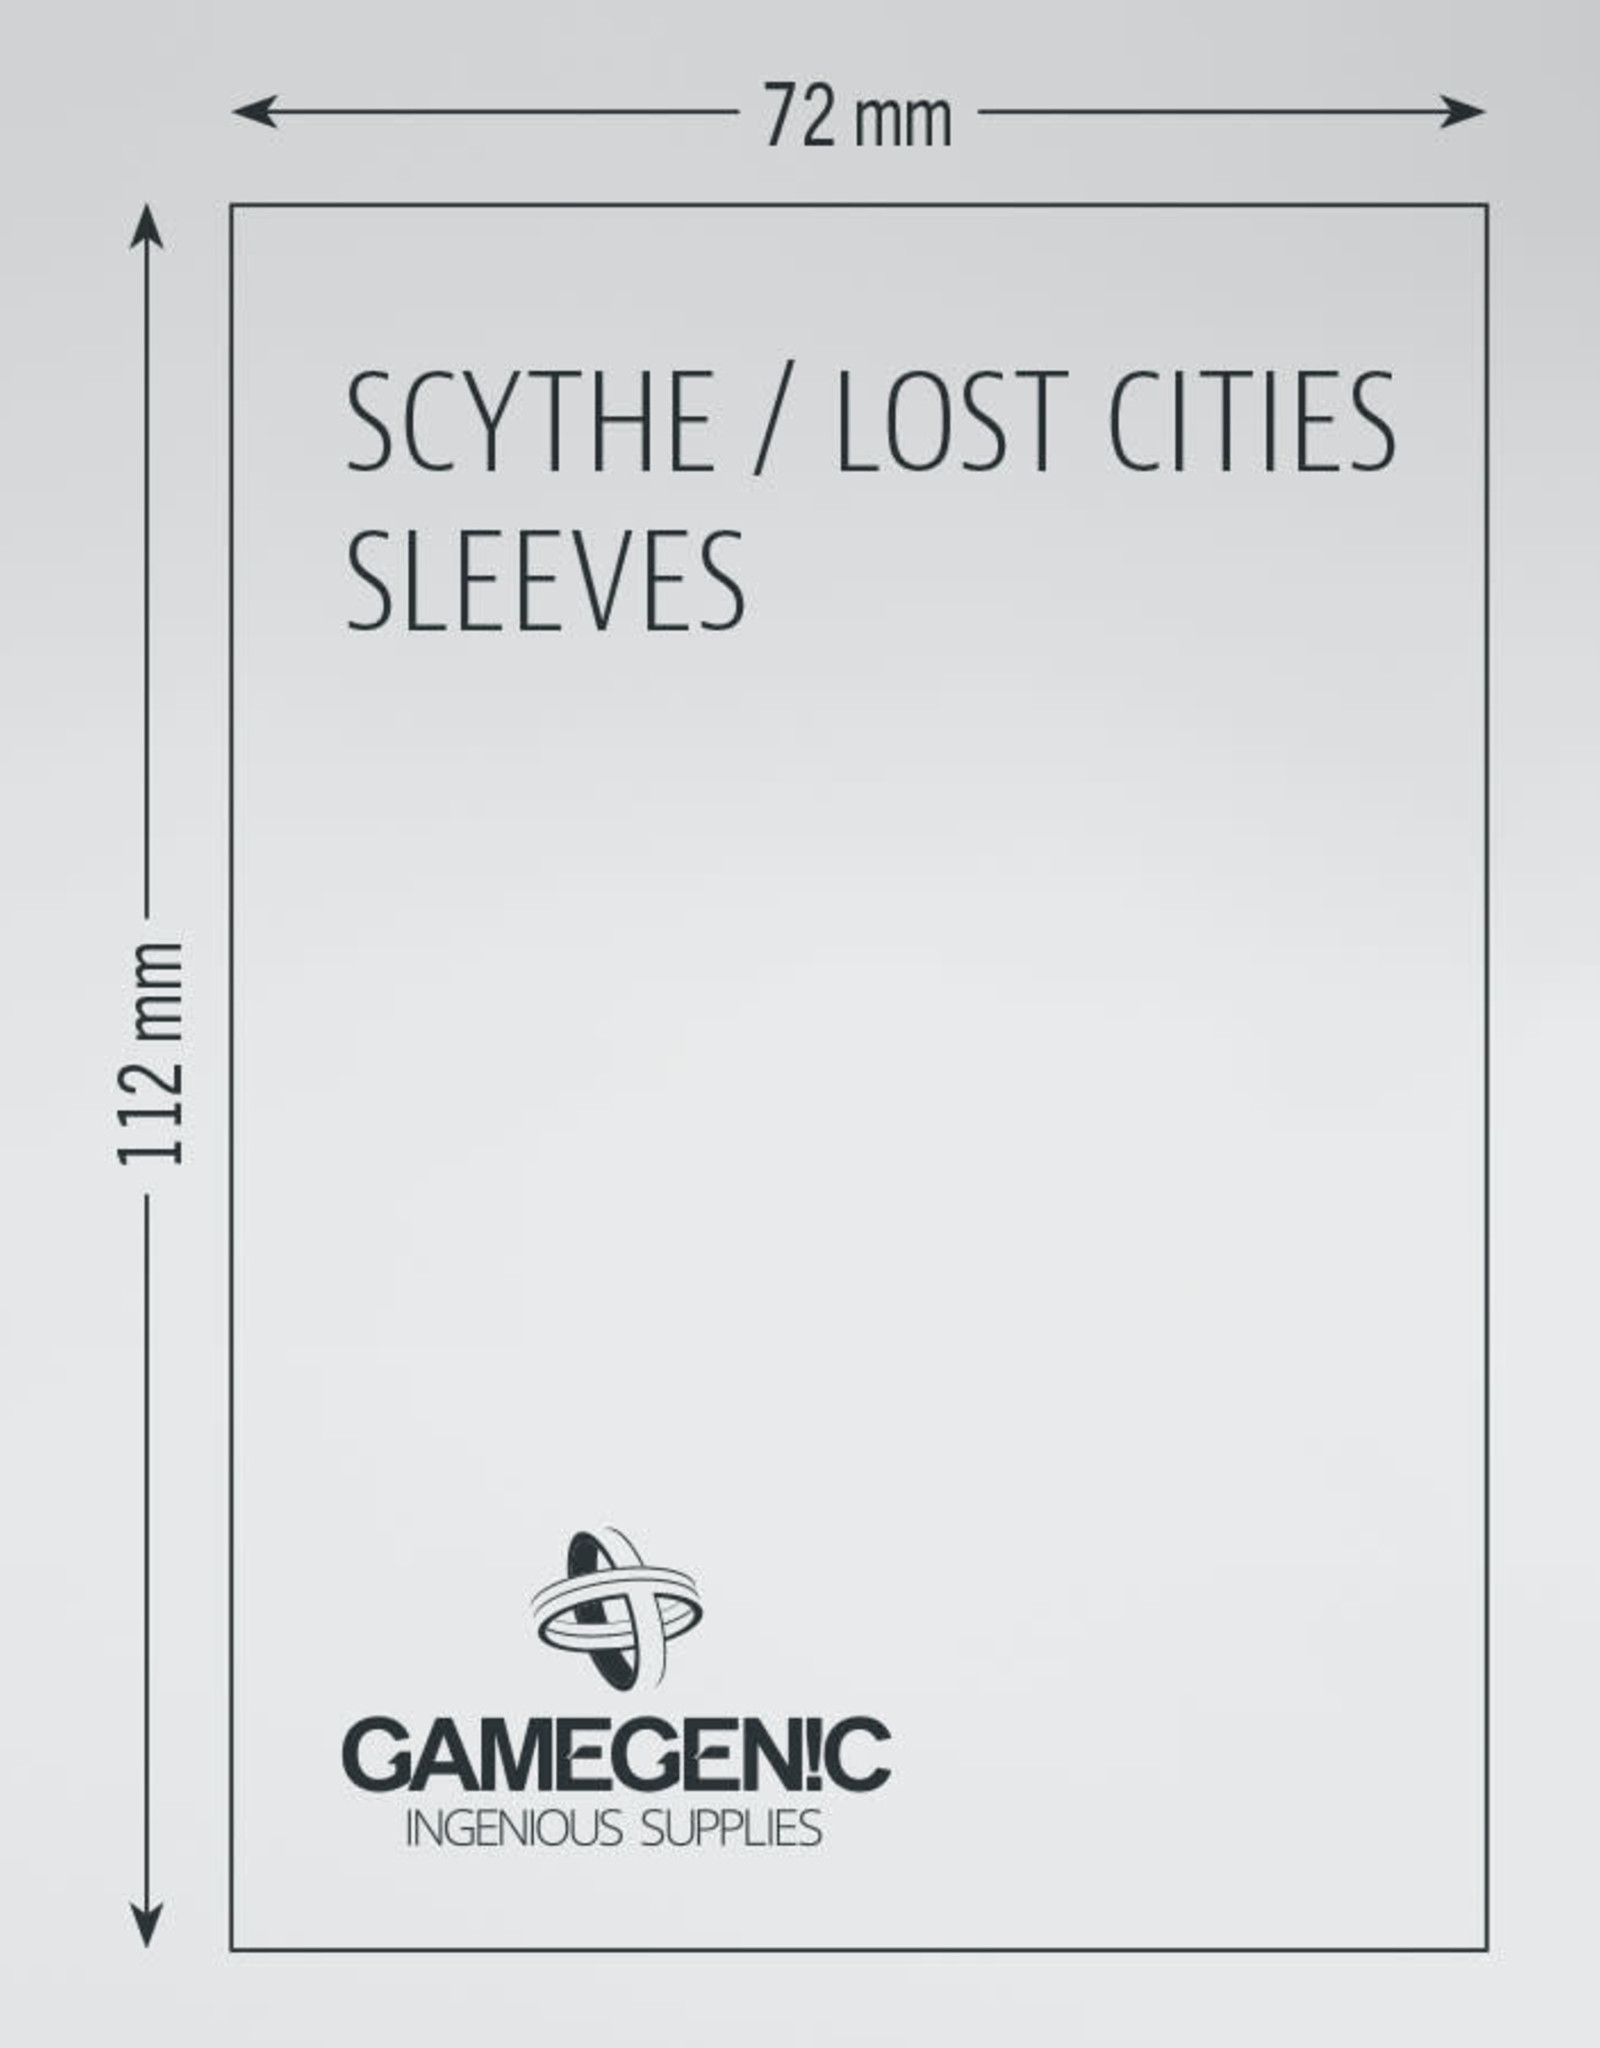 Prime Board Game Sleeves: Lost Cities (60) (Magenta)